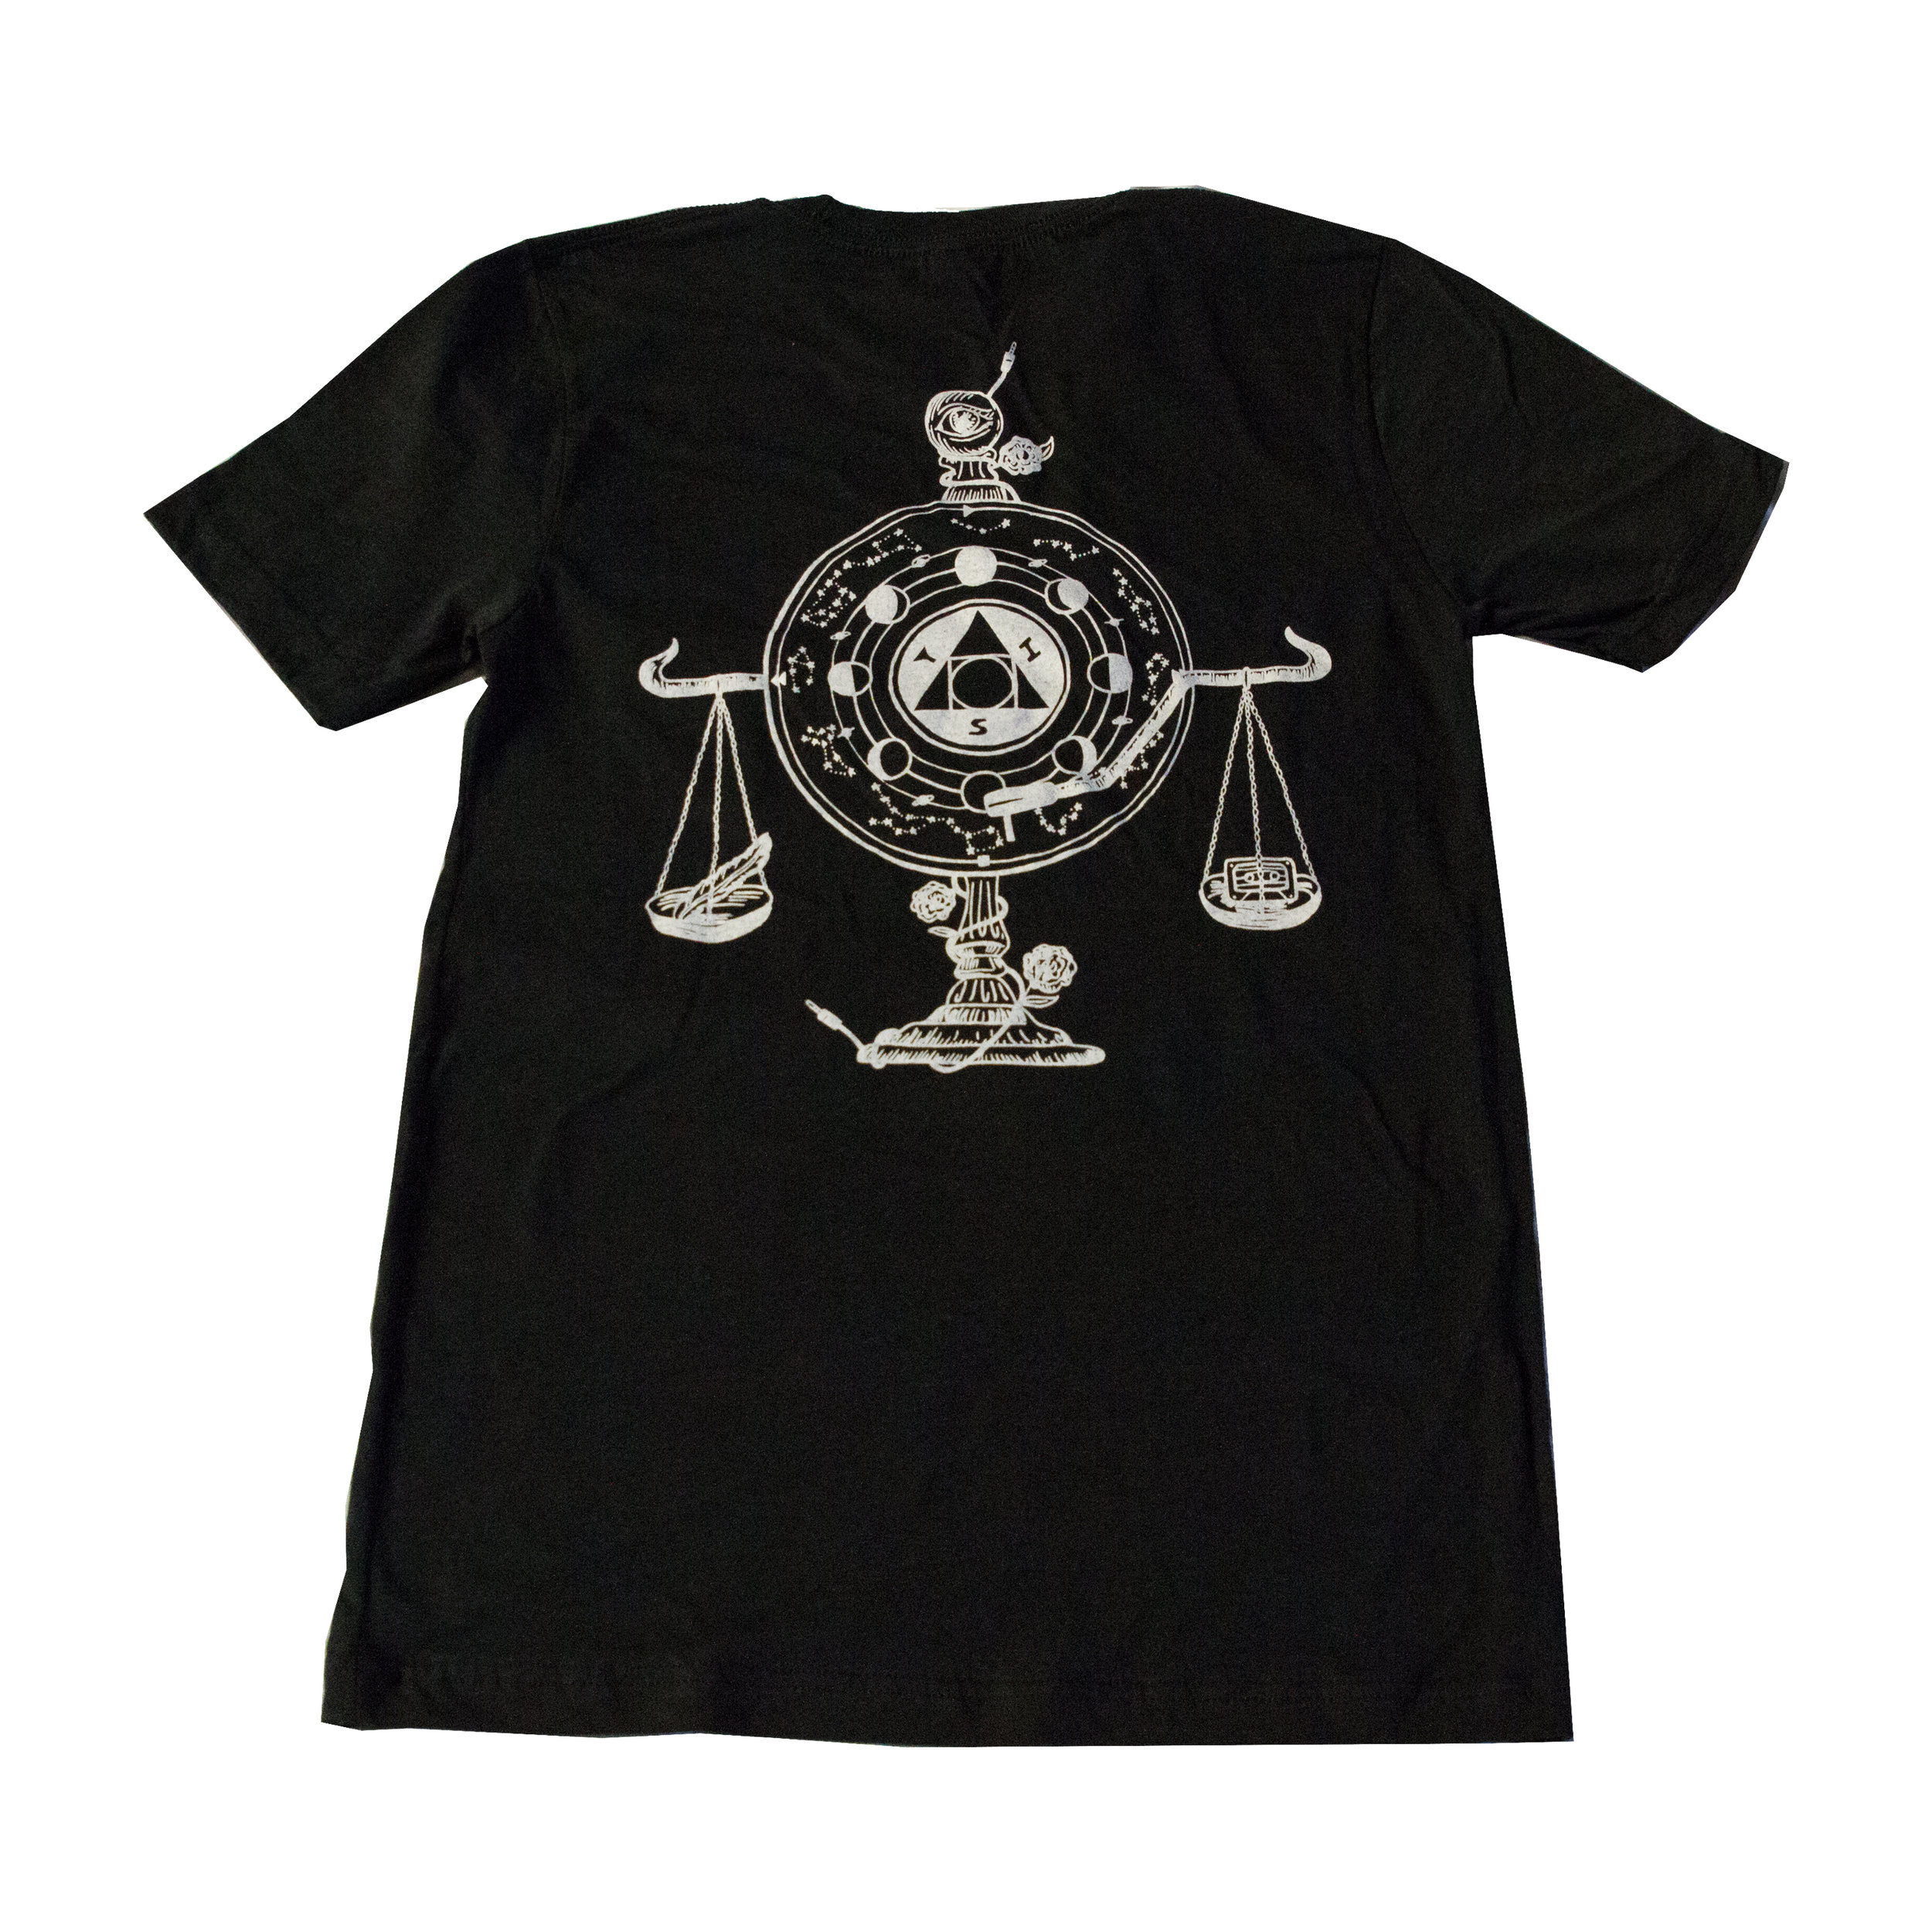 Alchemy T-Shirt – $20.00